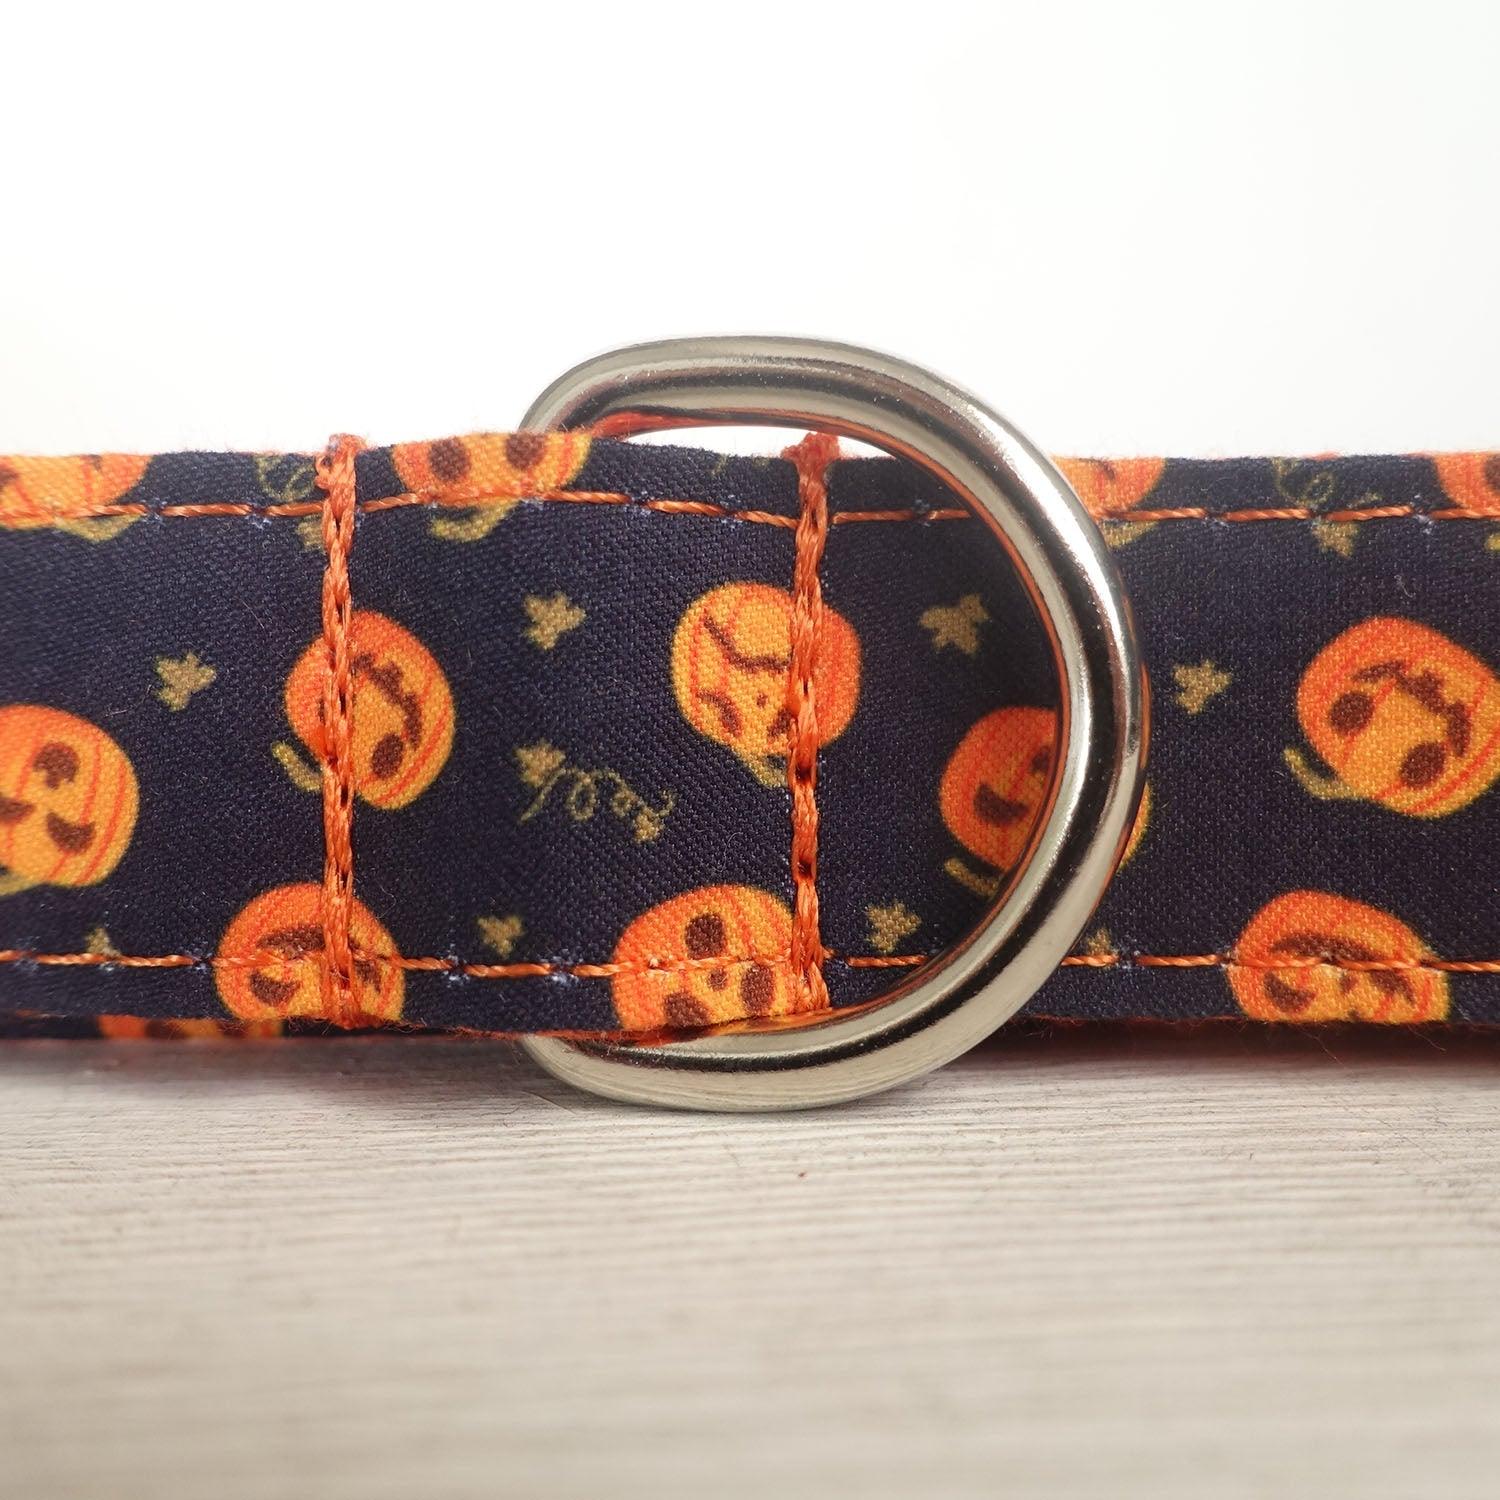 Helloween Pumpkin Personalized Dog Collar Set - iTalkPet